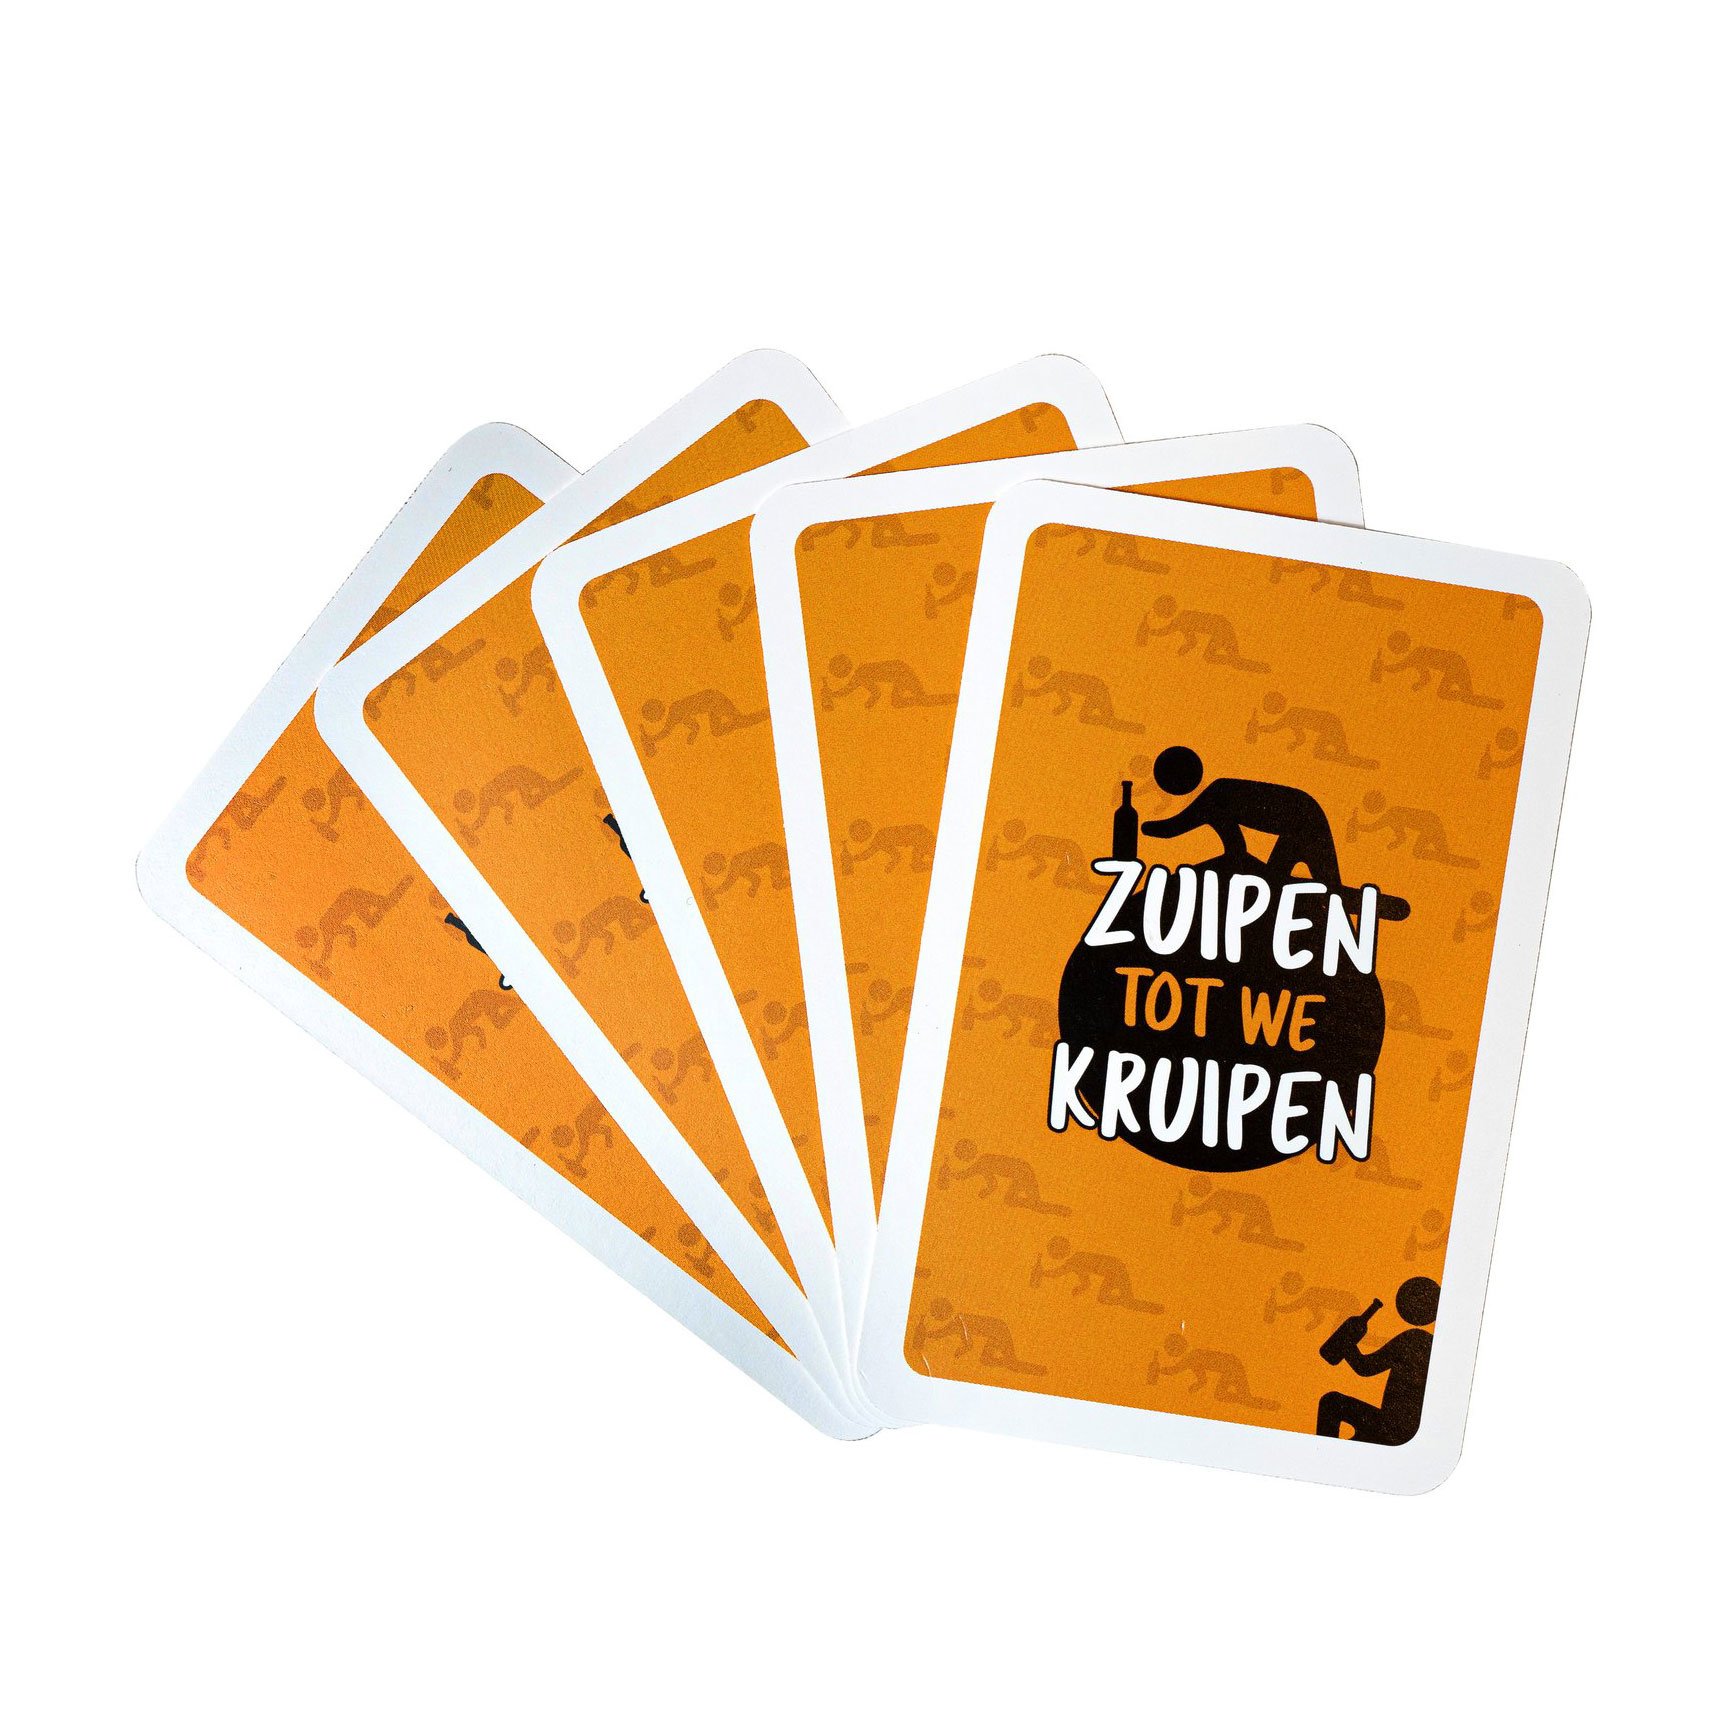 Zuipen Tot We Kruipen - Drankspel - 99 opdrachten